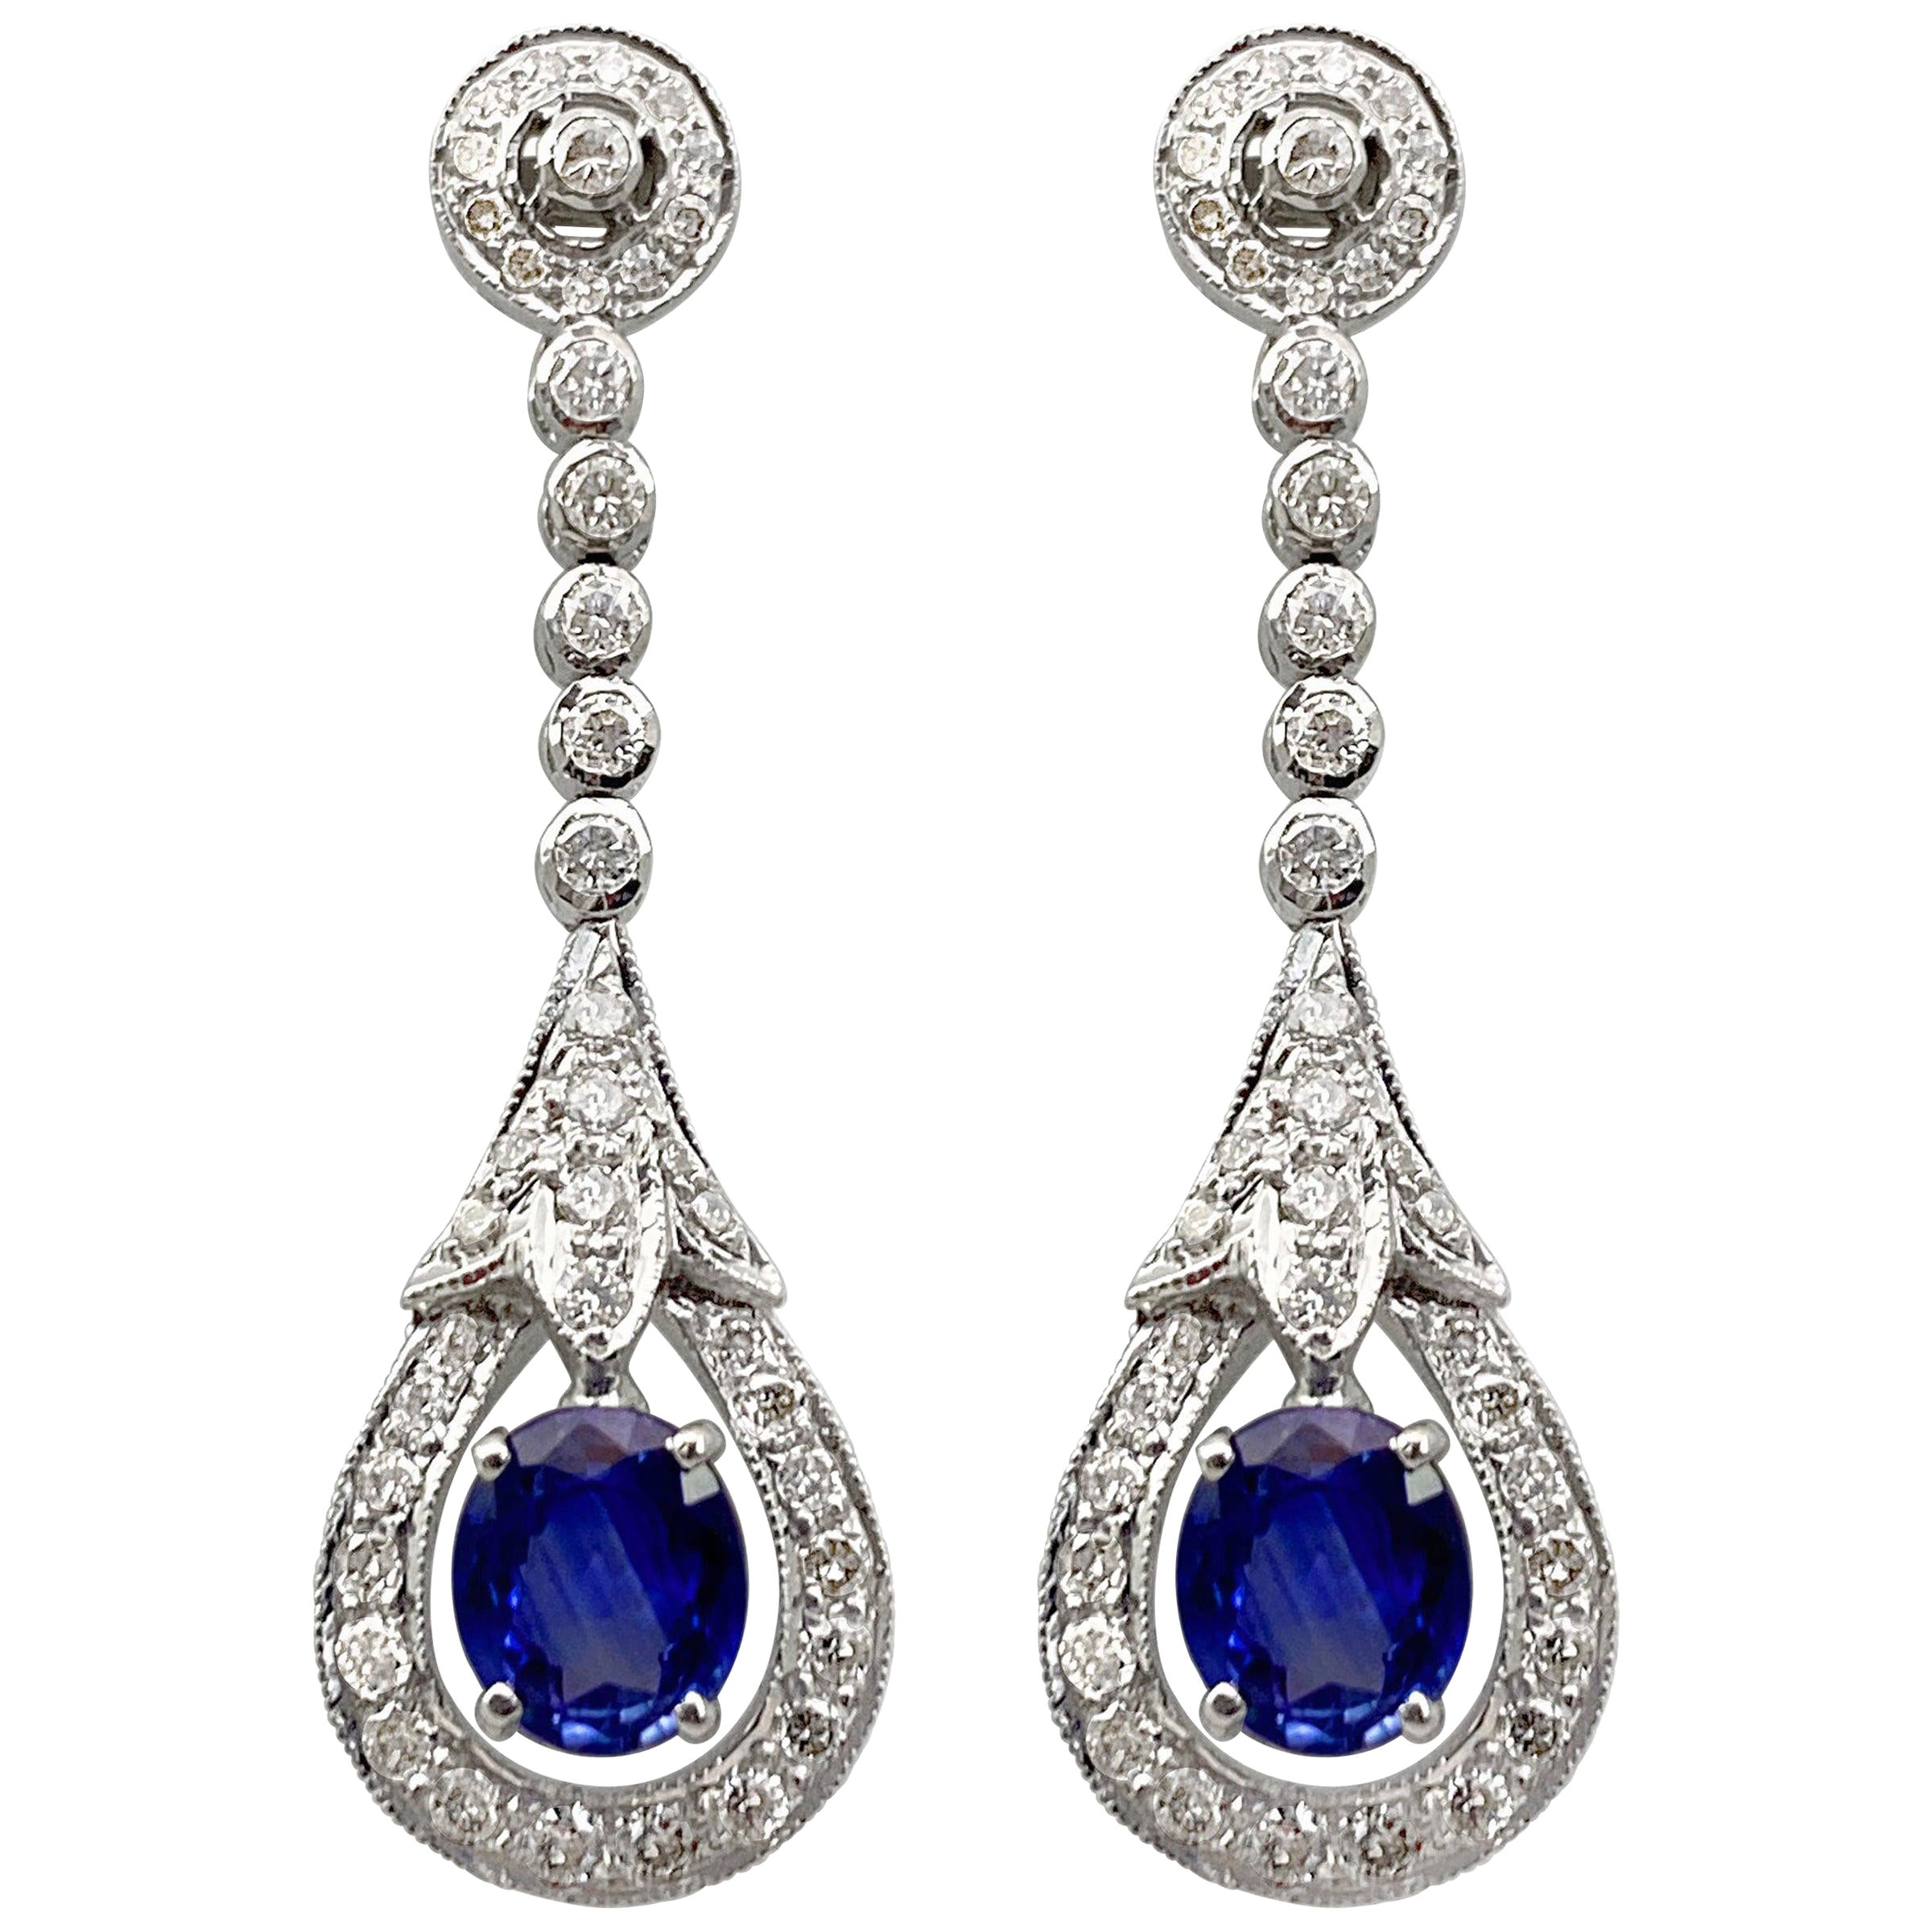 2.21 Carat Natural Blue Sapphire Venus Drop Earrings with 1.5 Carat Diamonds